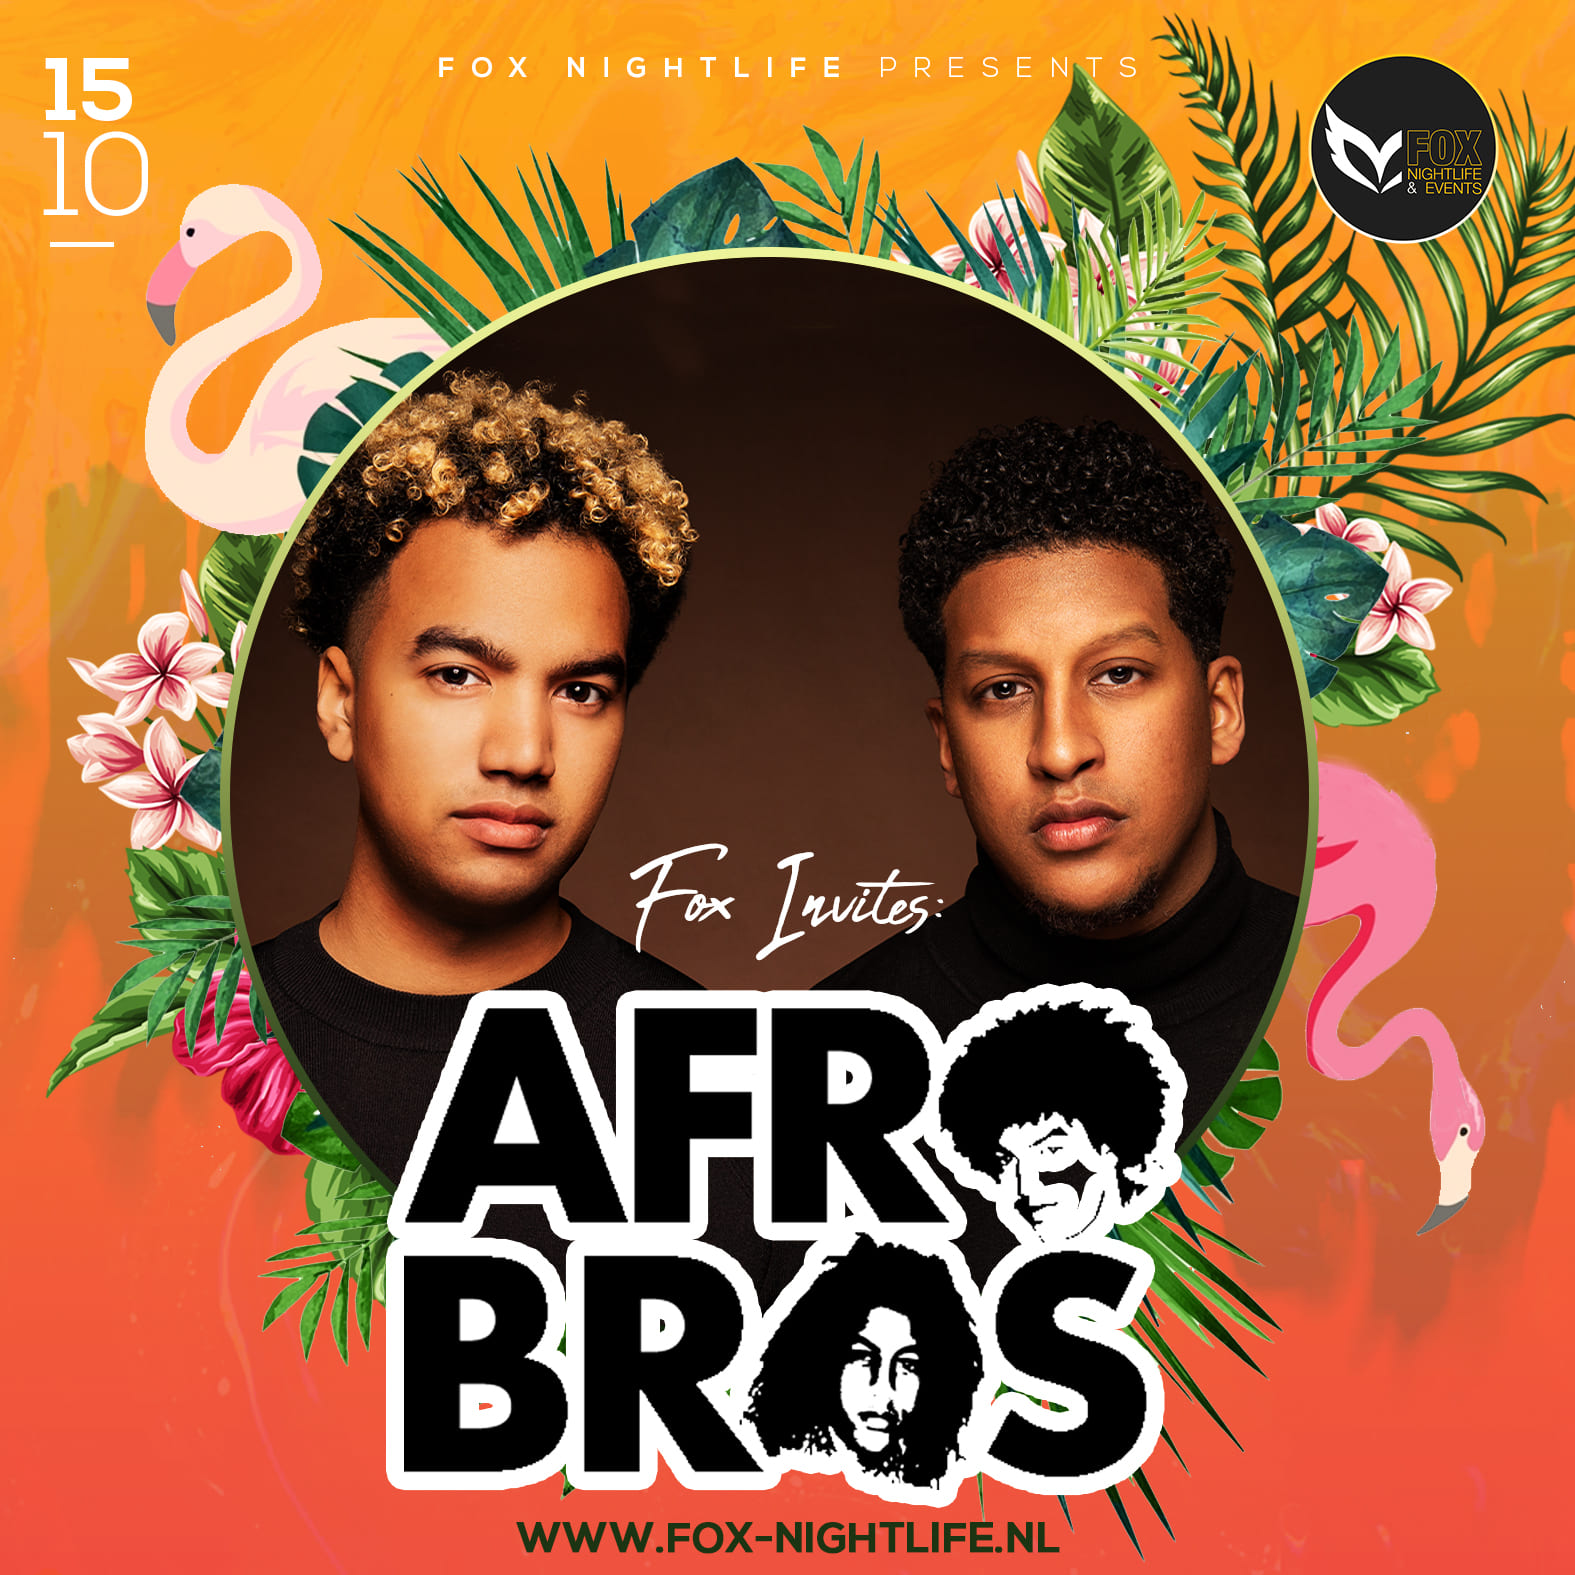 FOX Invites: Afro Bros